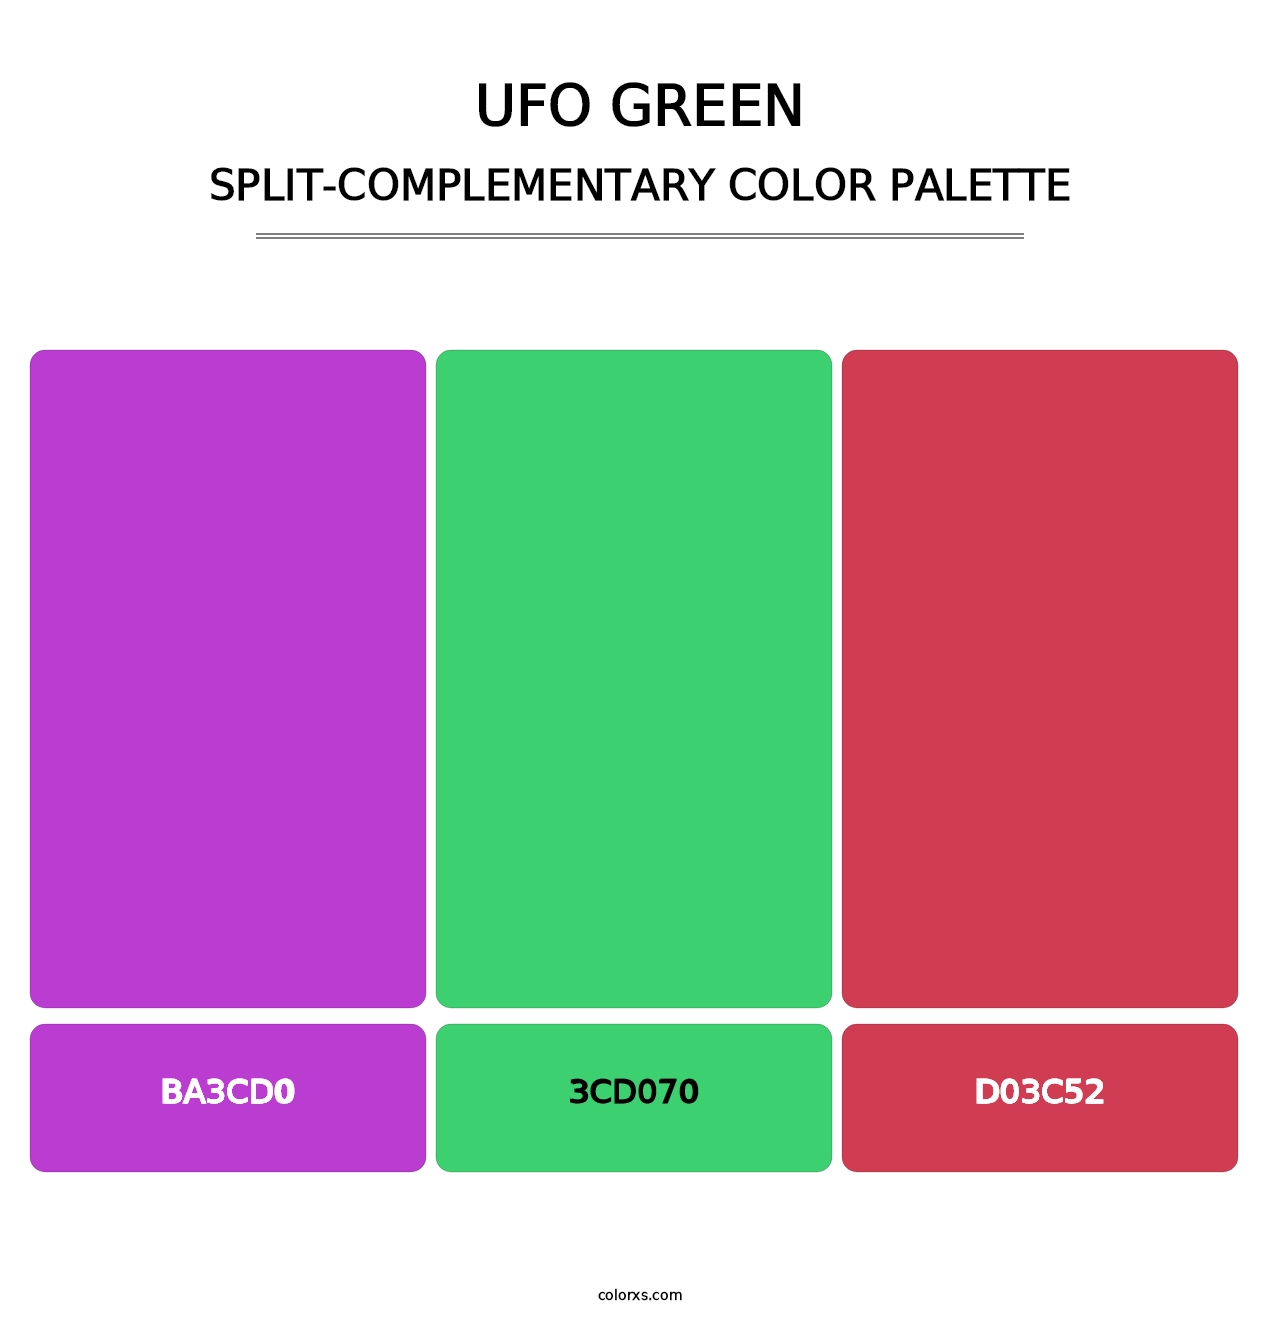 UFO Green - Split-Complementary Color Palette